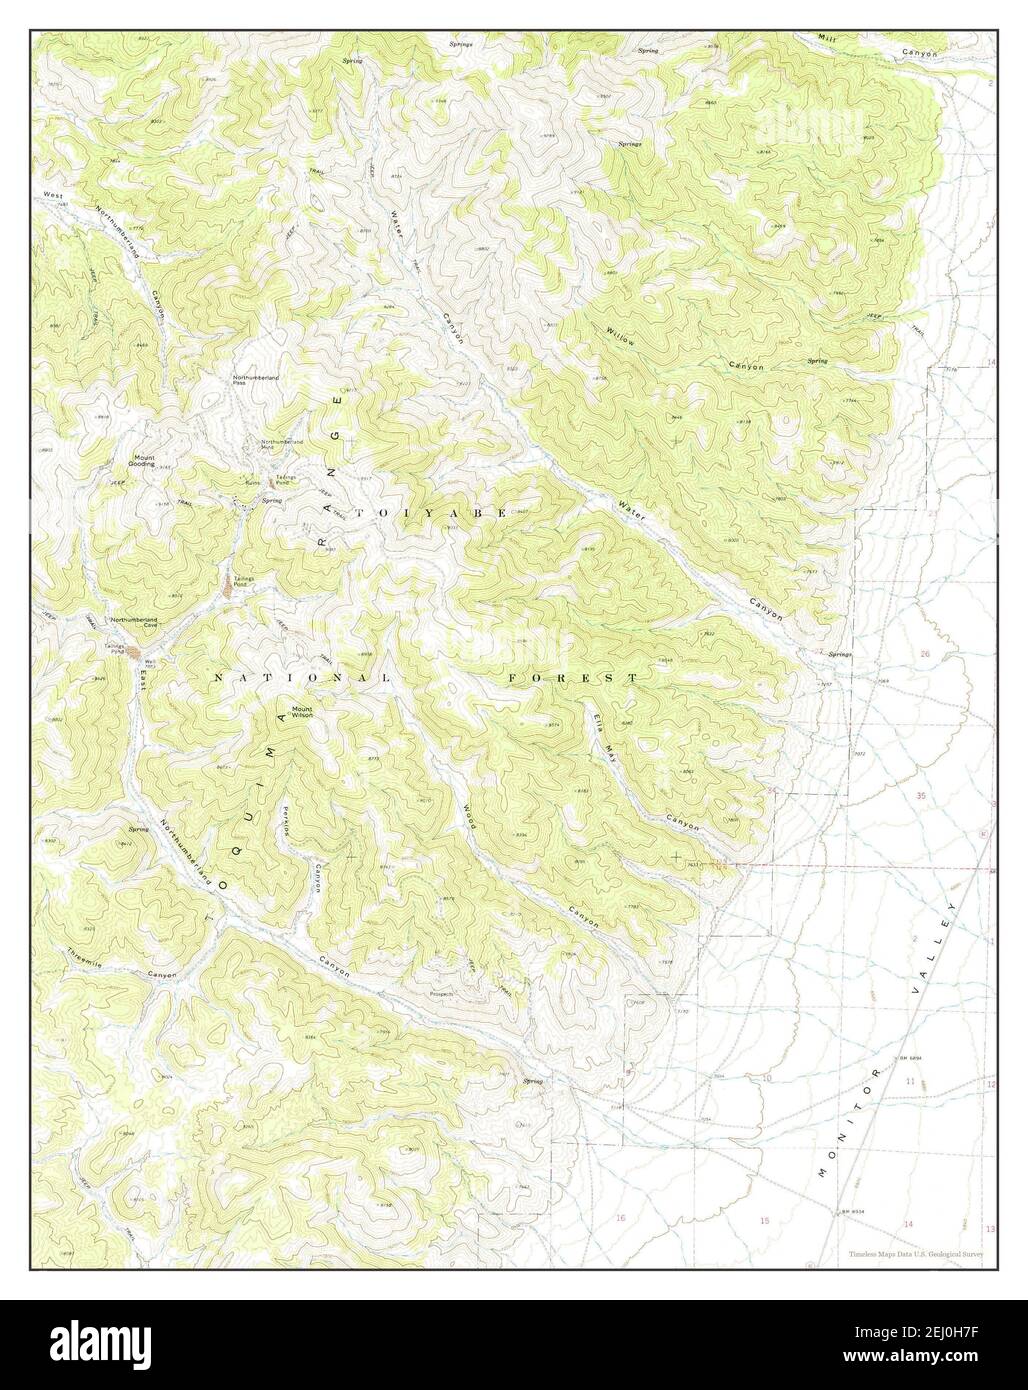 Northumberland Pass, Nevada, map 1971, 1:24000, United States of America by Timeless Maps, data U.S. Geological Survey Stock Photo